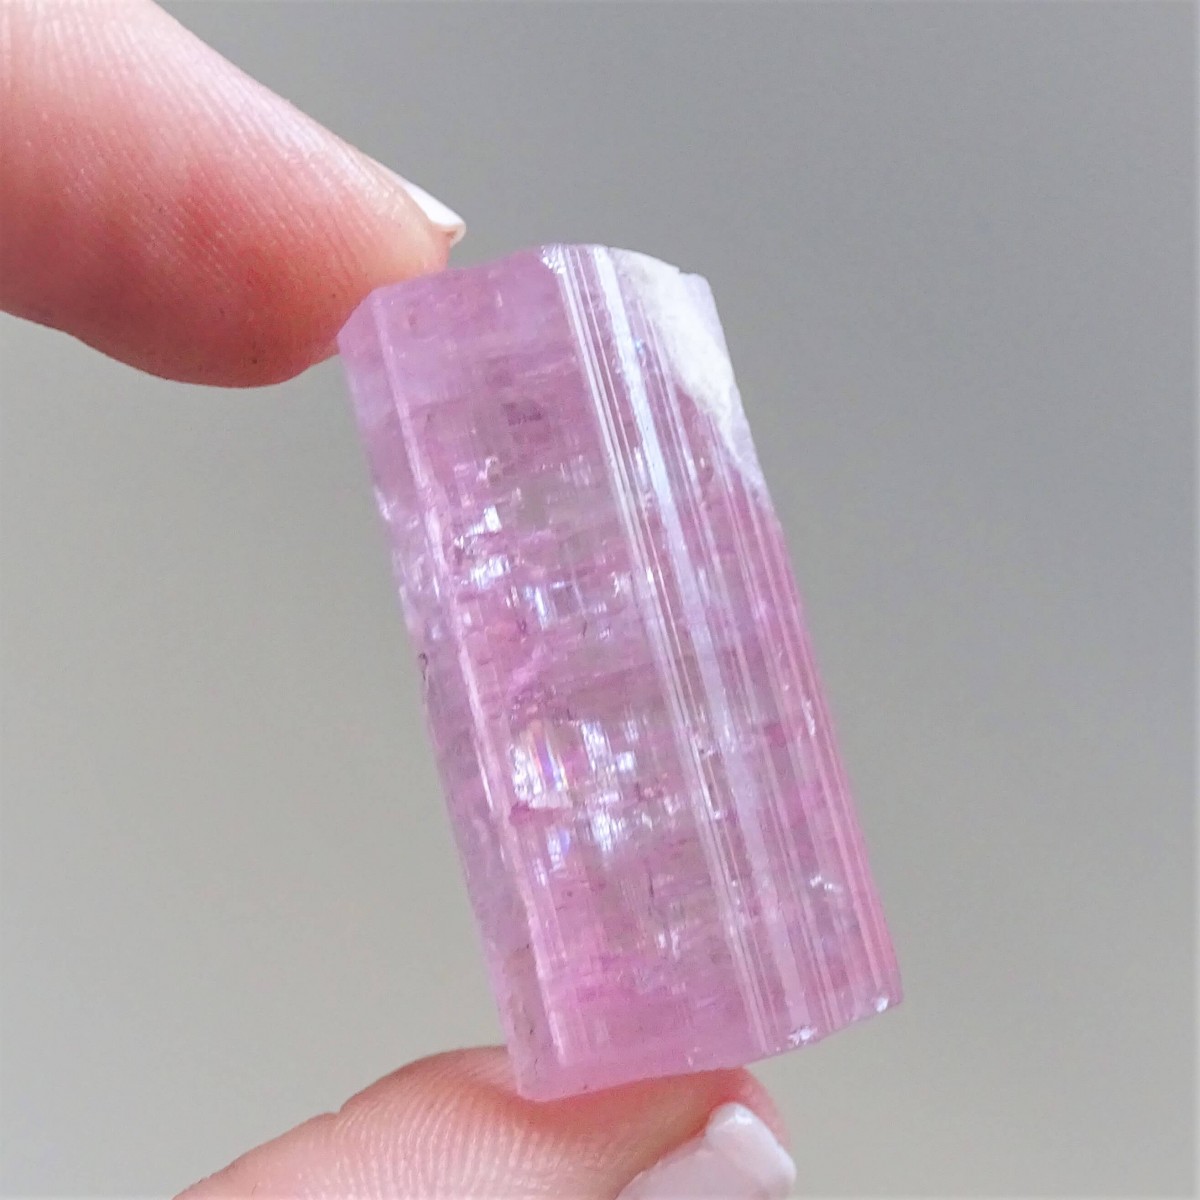 Turmalin rosa natürlicher Kristall 15,7 g, Afghanistan